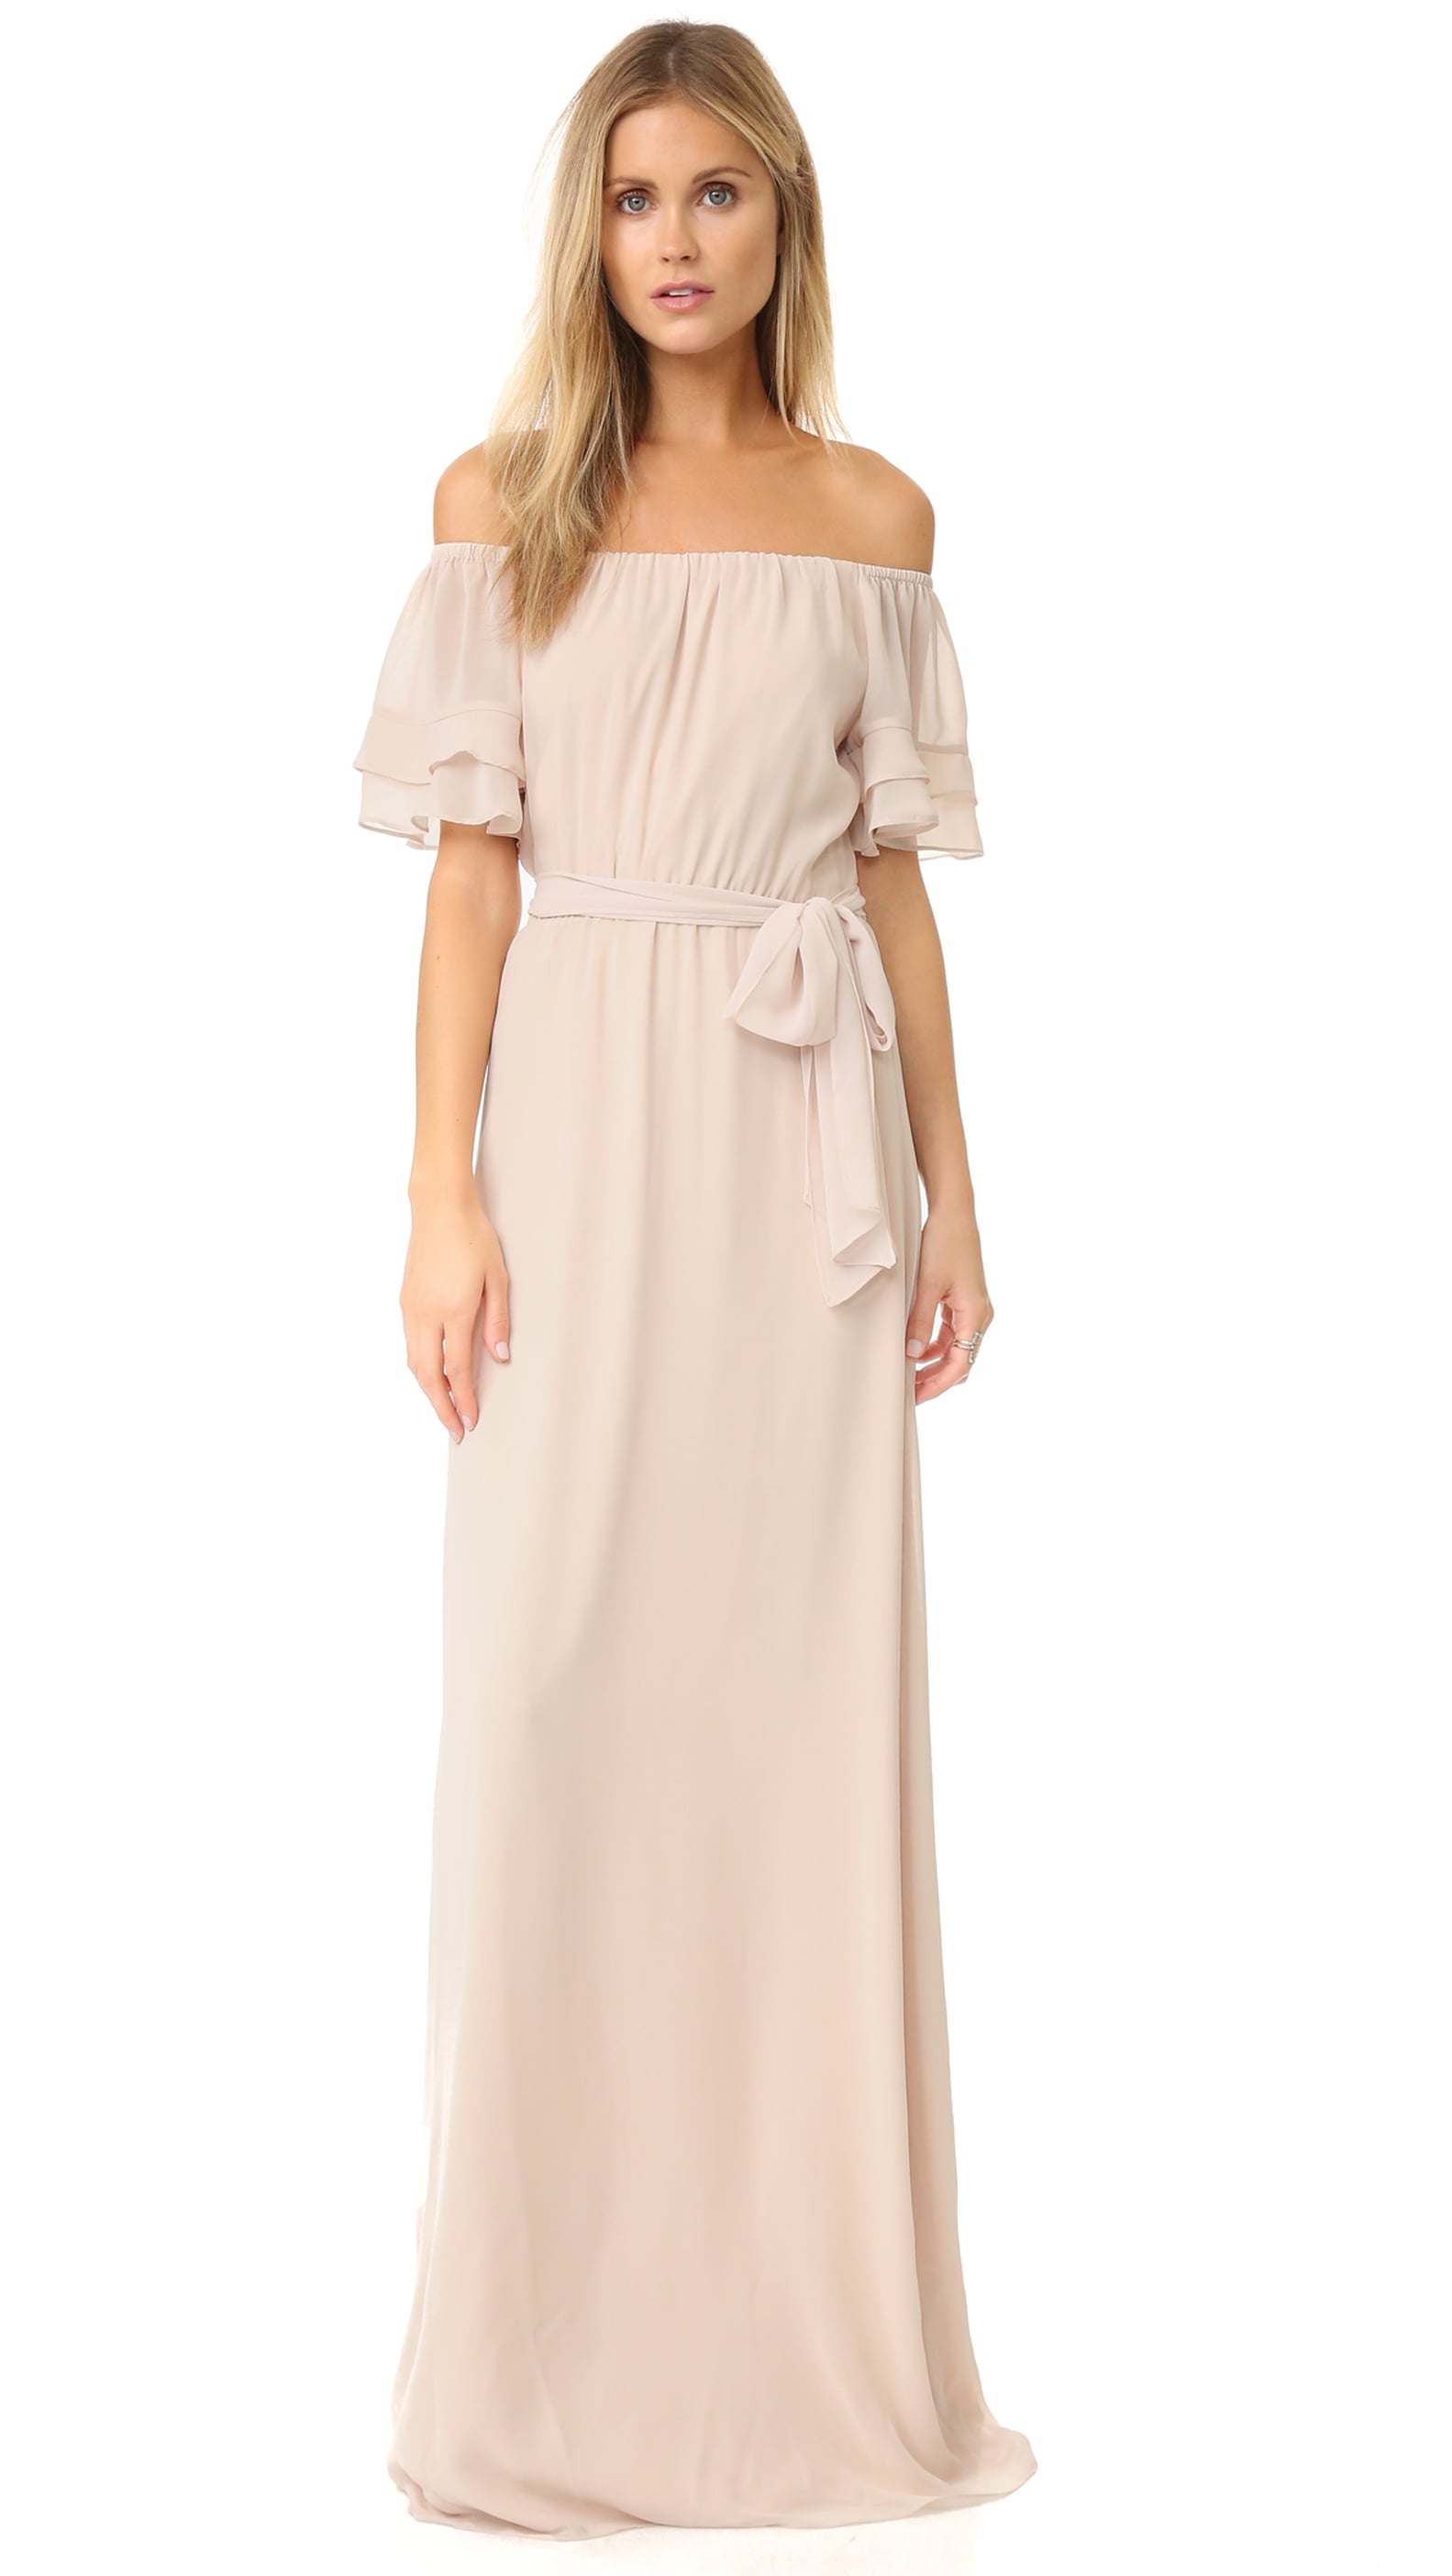 Lauren Conrad Paper Crown Bridesmaid Dress | POPSUGAR Fashion